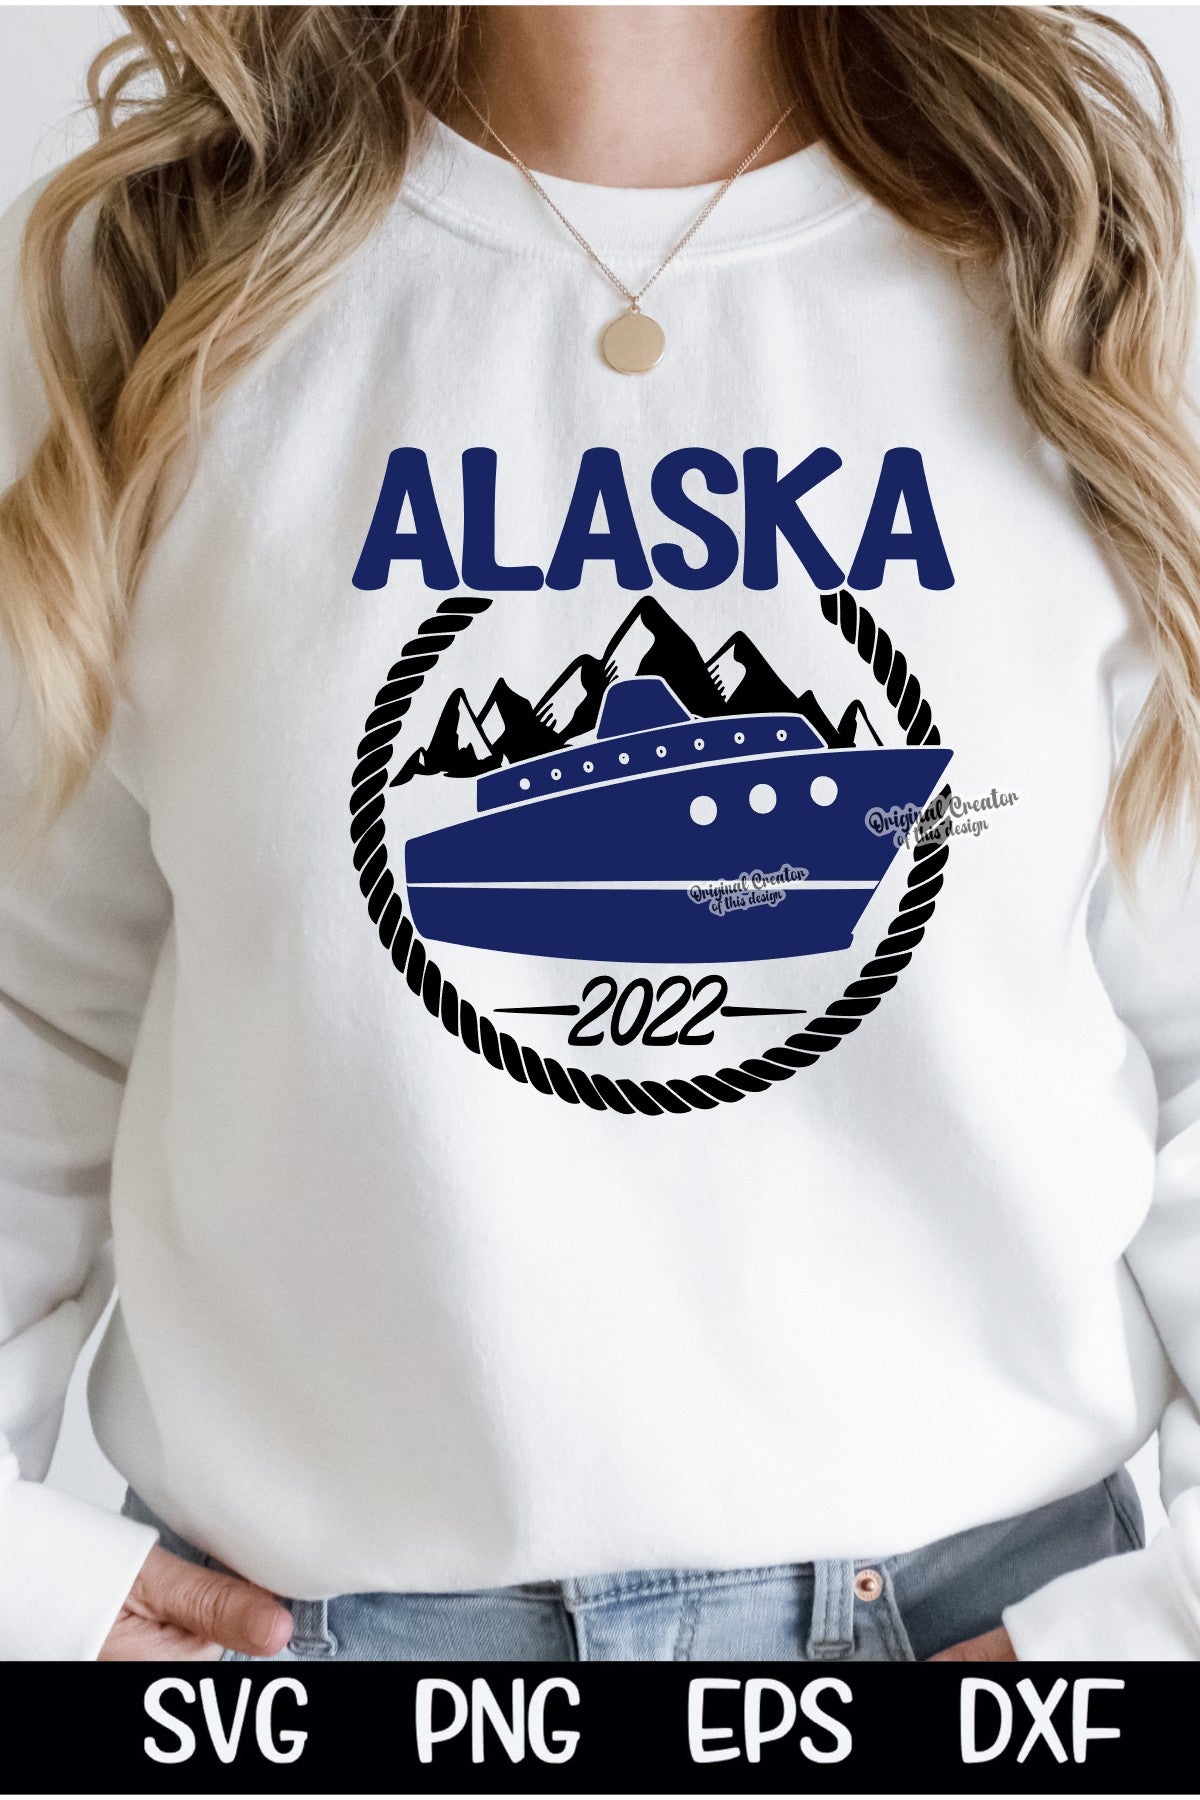 Alaska Cruise 2022 SVG PNG FAMILY CRUISE MATCHING SHIRTS